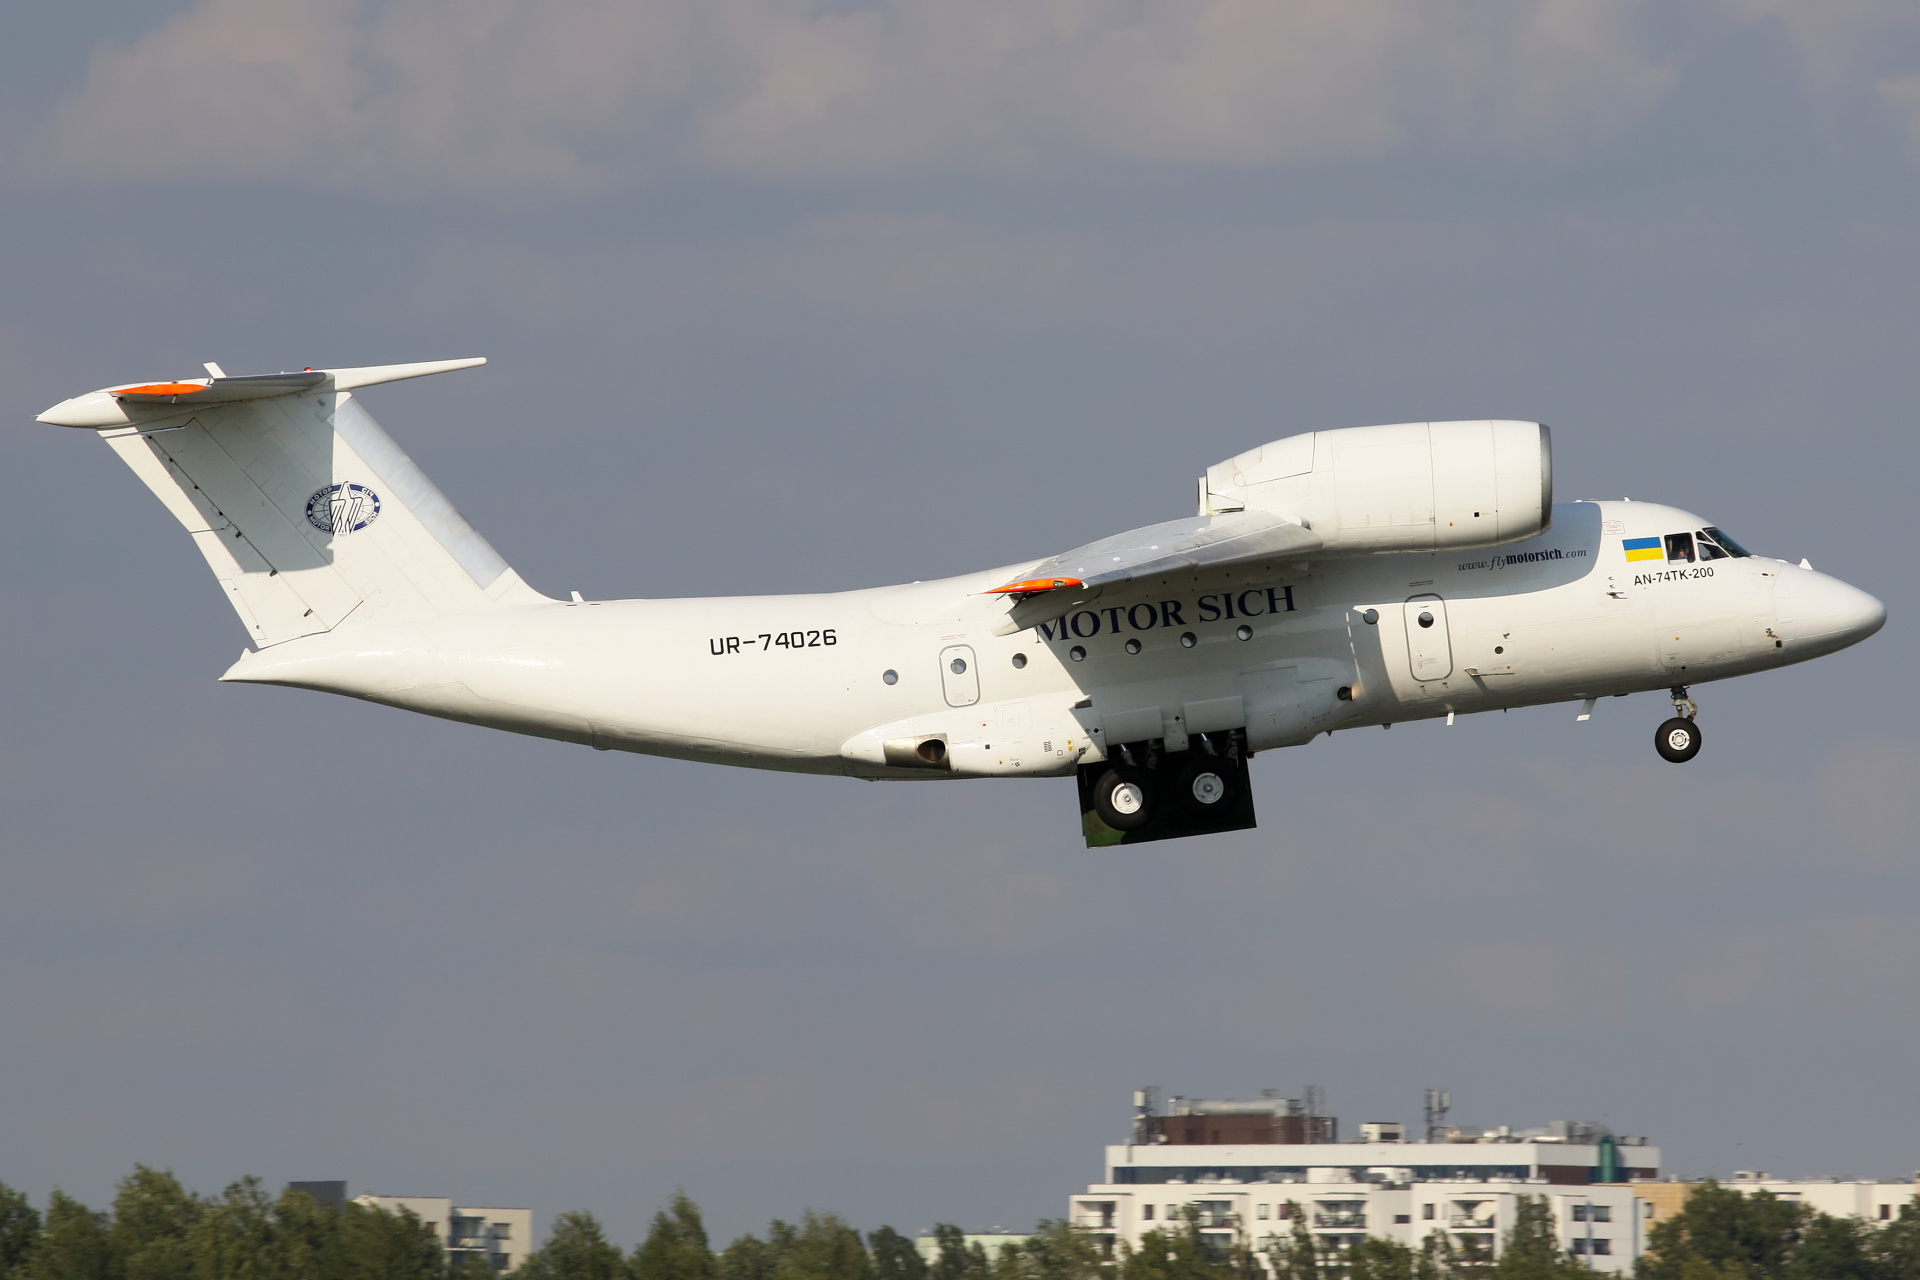 An-74TK-200, UR-74026, Motor Sich (Aircraft » EPWA Spotting » Antonov An-74)